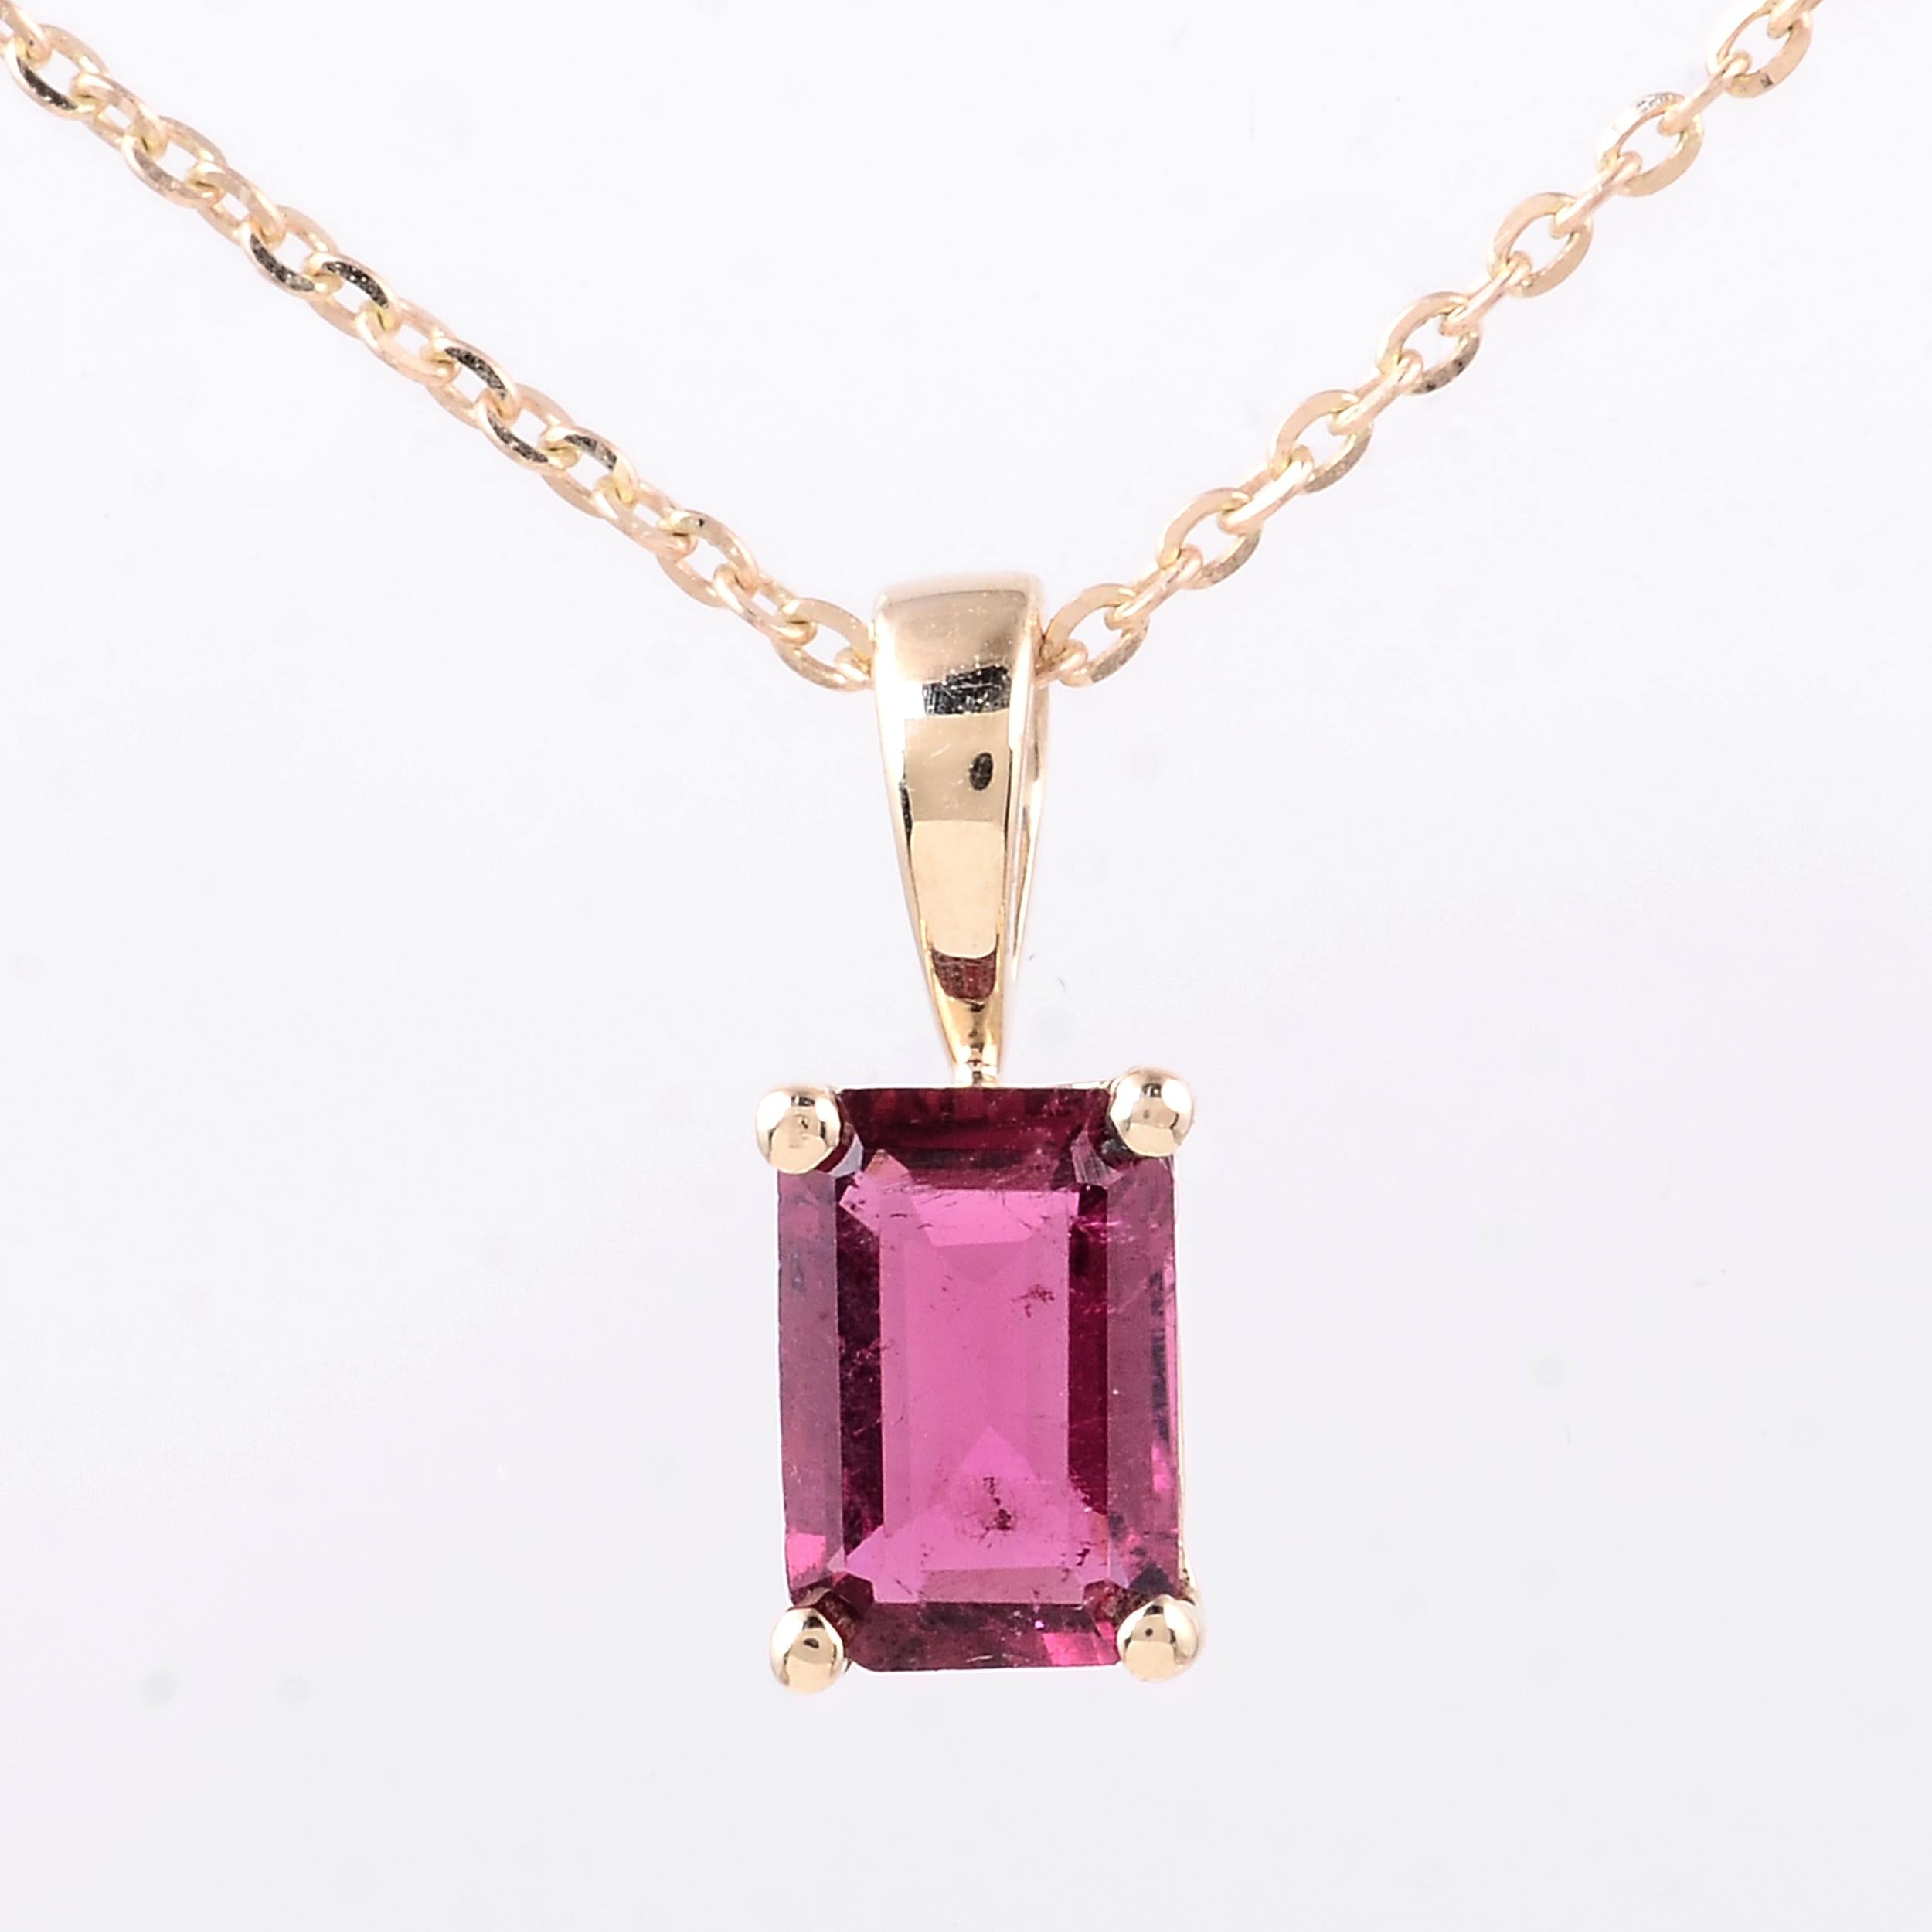 Brilliant Cut 14K Tourmaline Pendant Necklace - Elegant Jewelry for Unique Style Statement For Sale